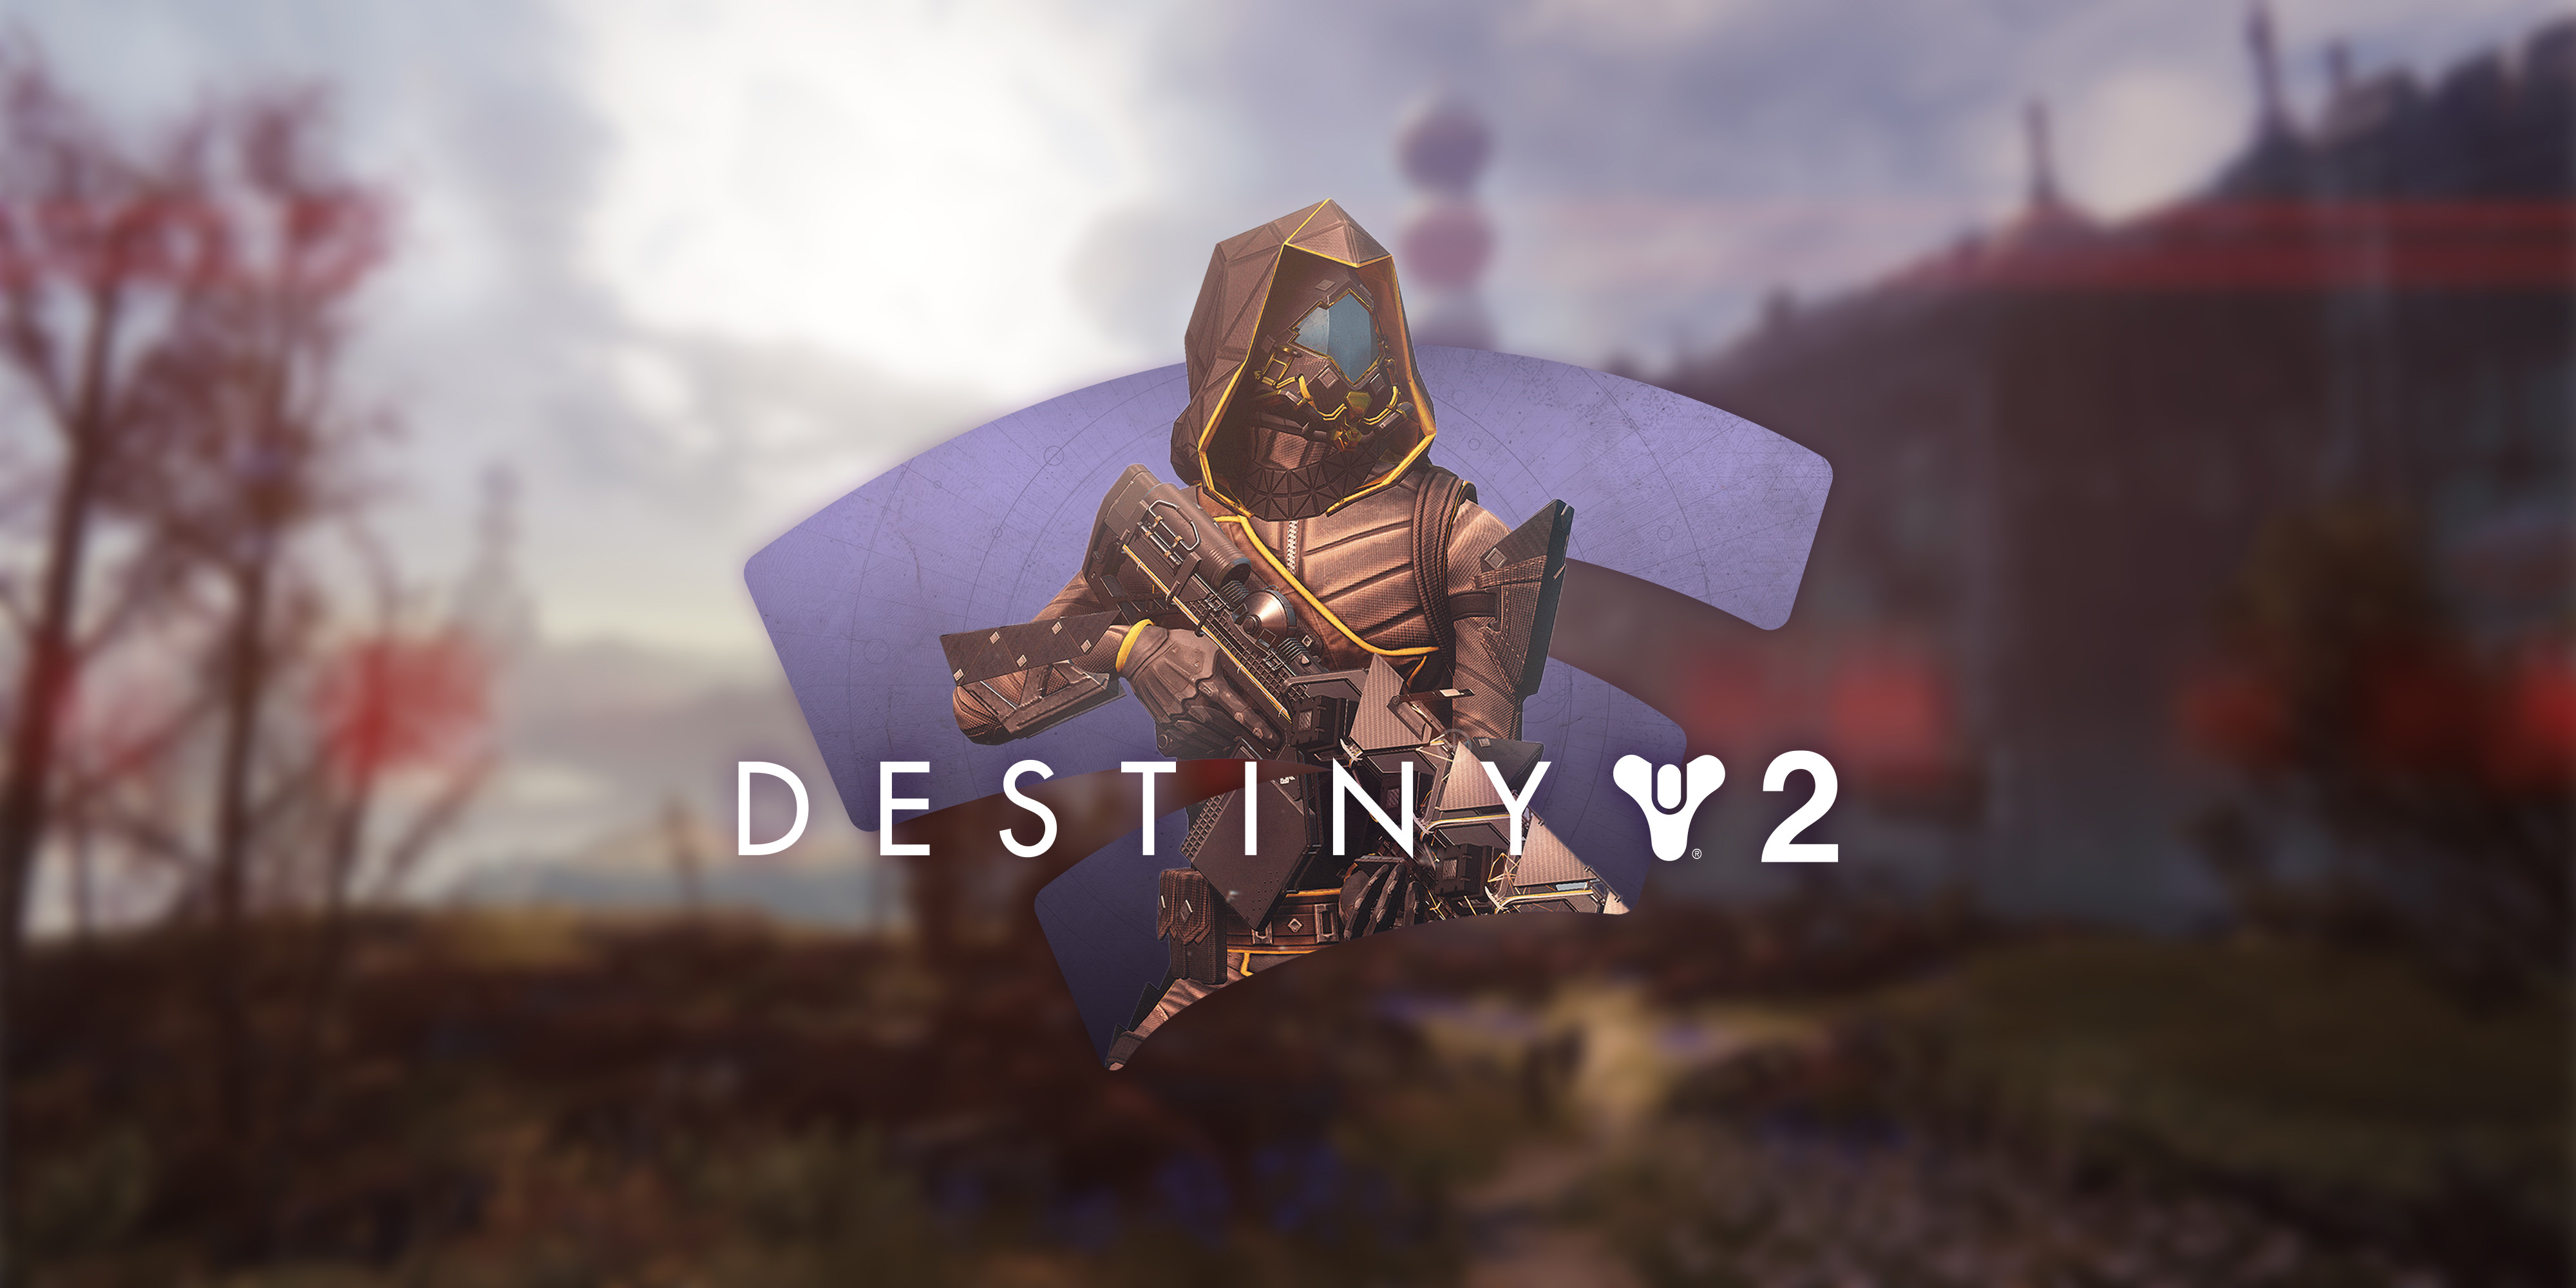 Destiny two has added Dawning Spirit.